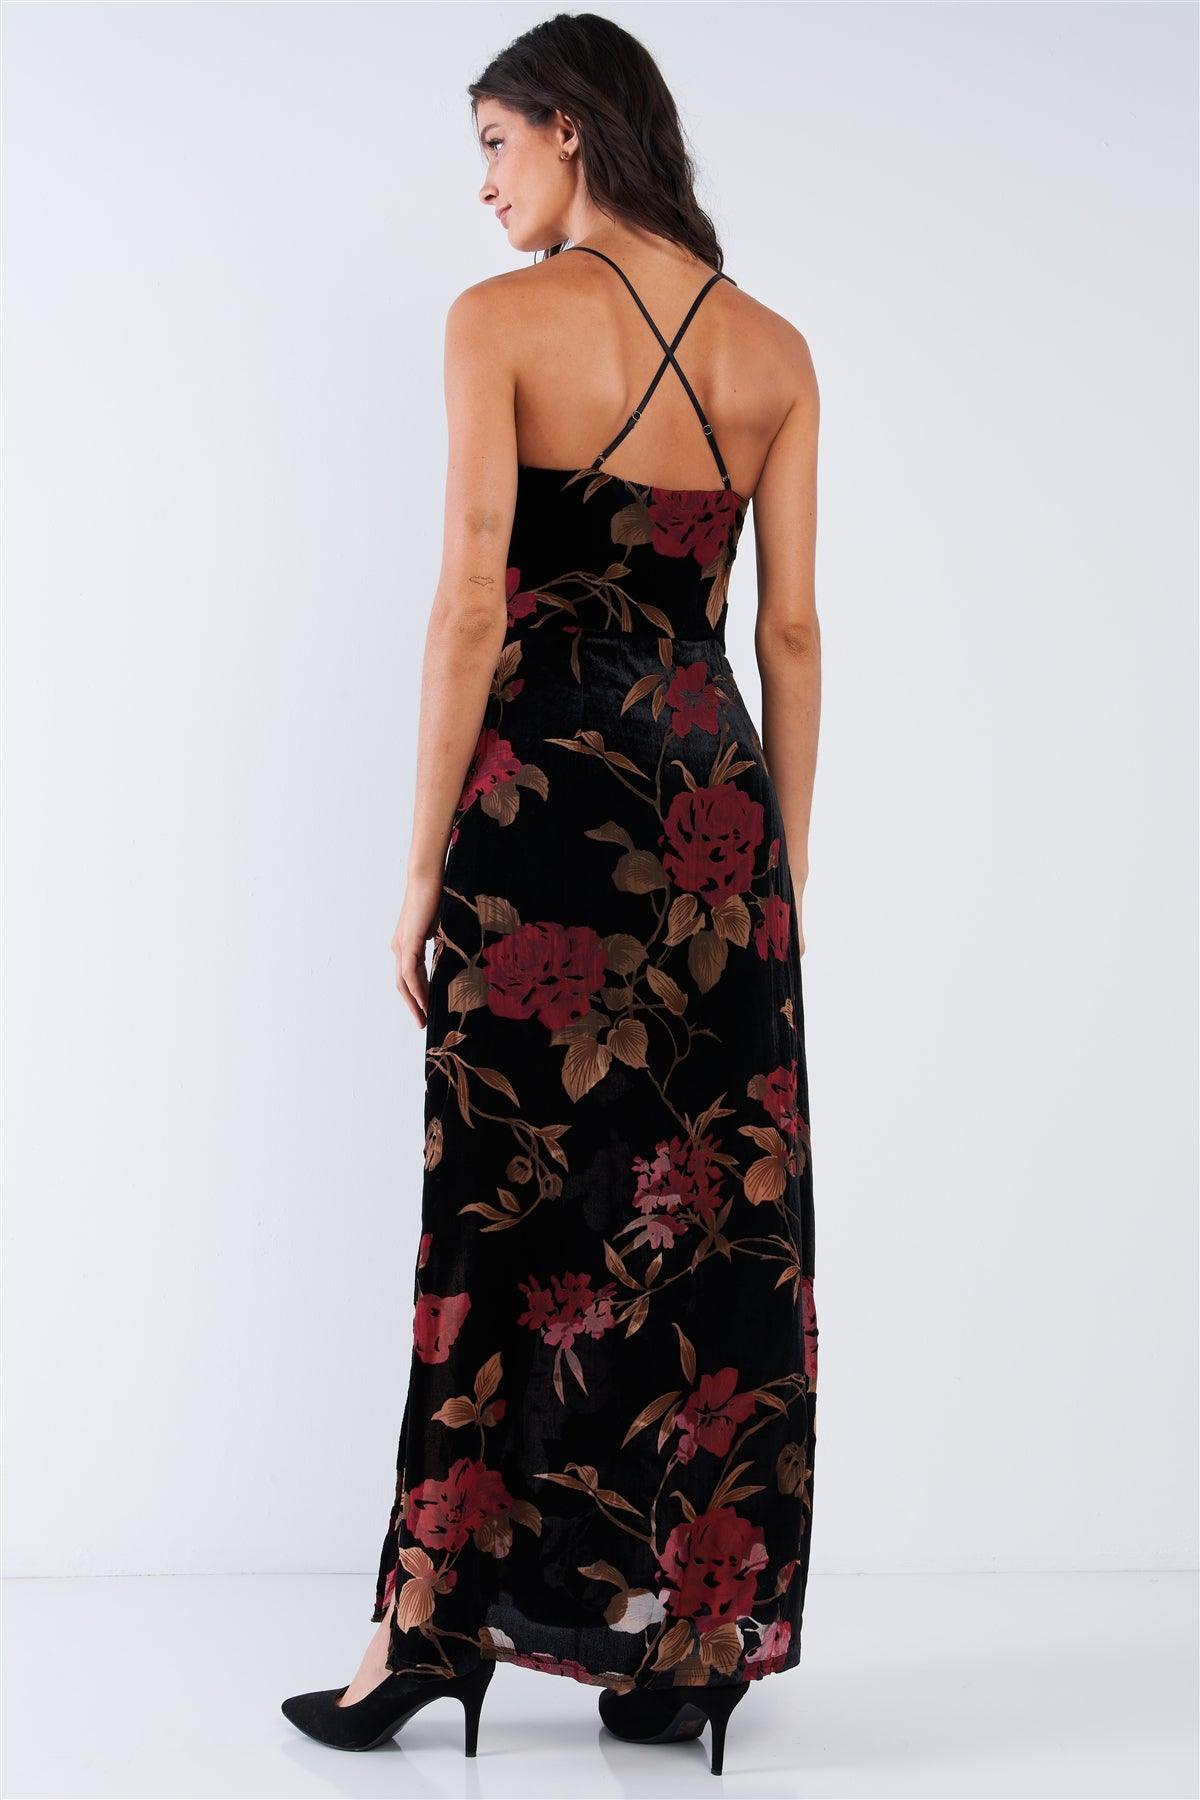 Black Velvet Multi Color Floral Print V-Neck Criss-Cross Back Straps Maxi Dress /3-1-2